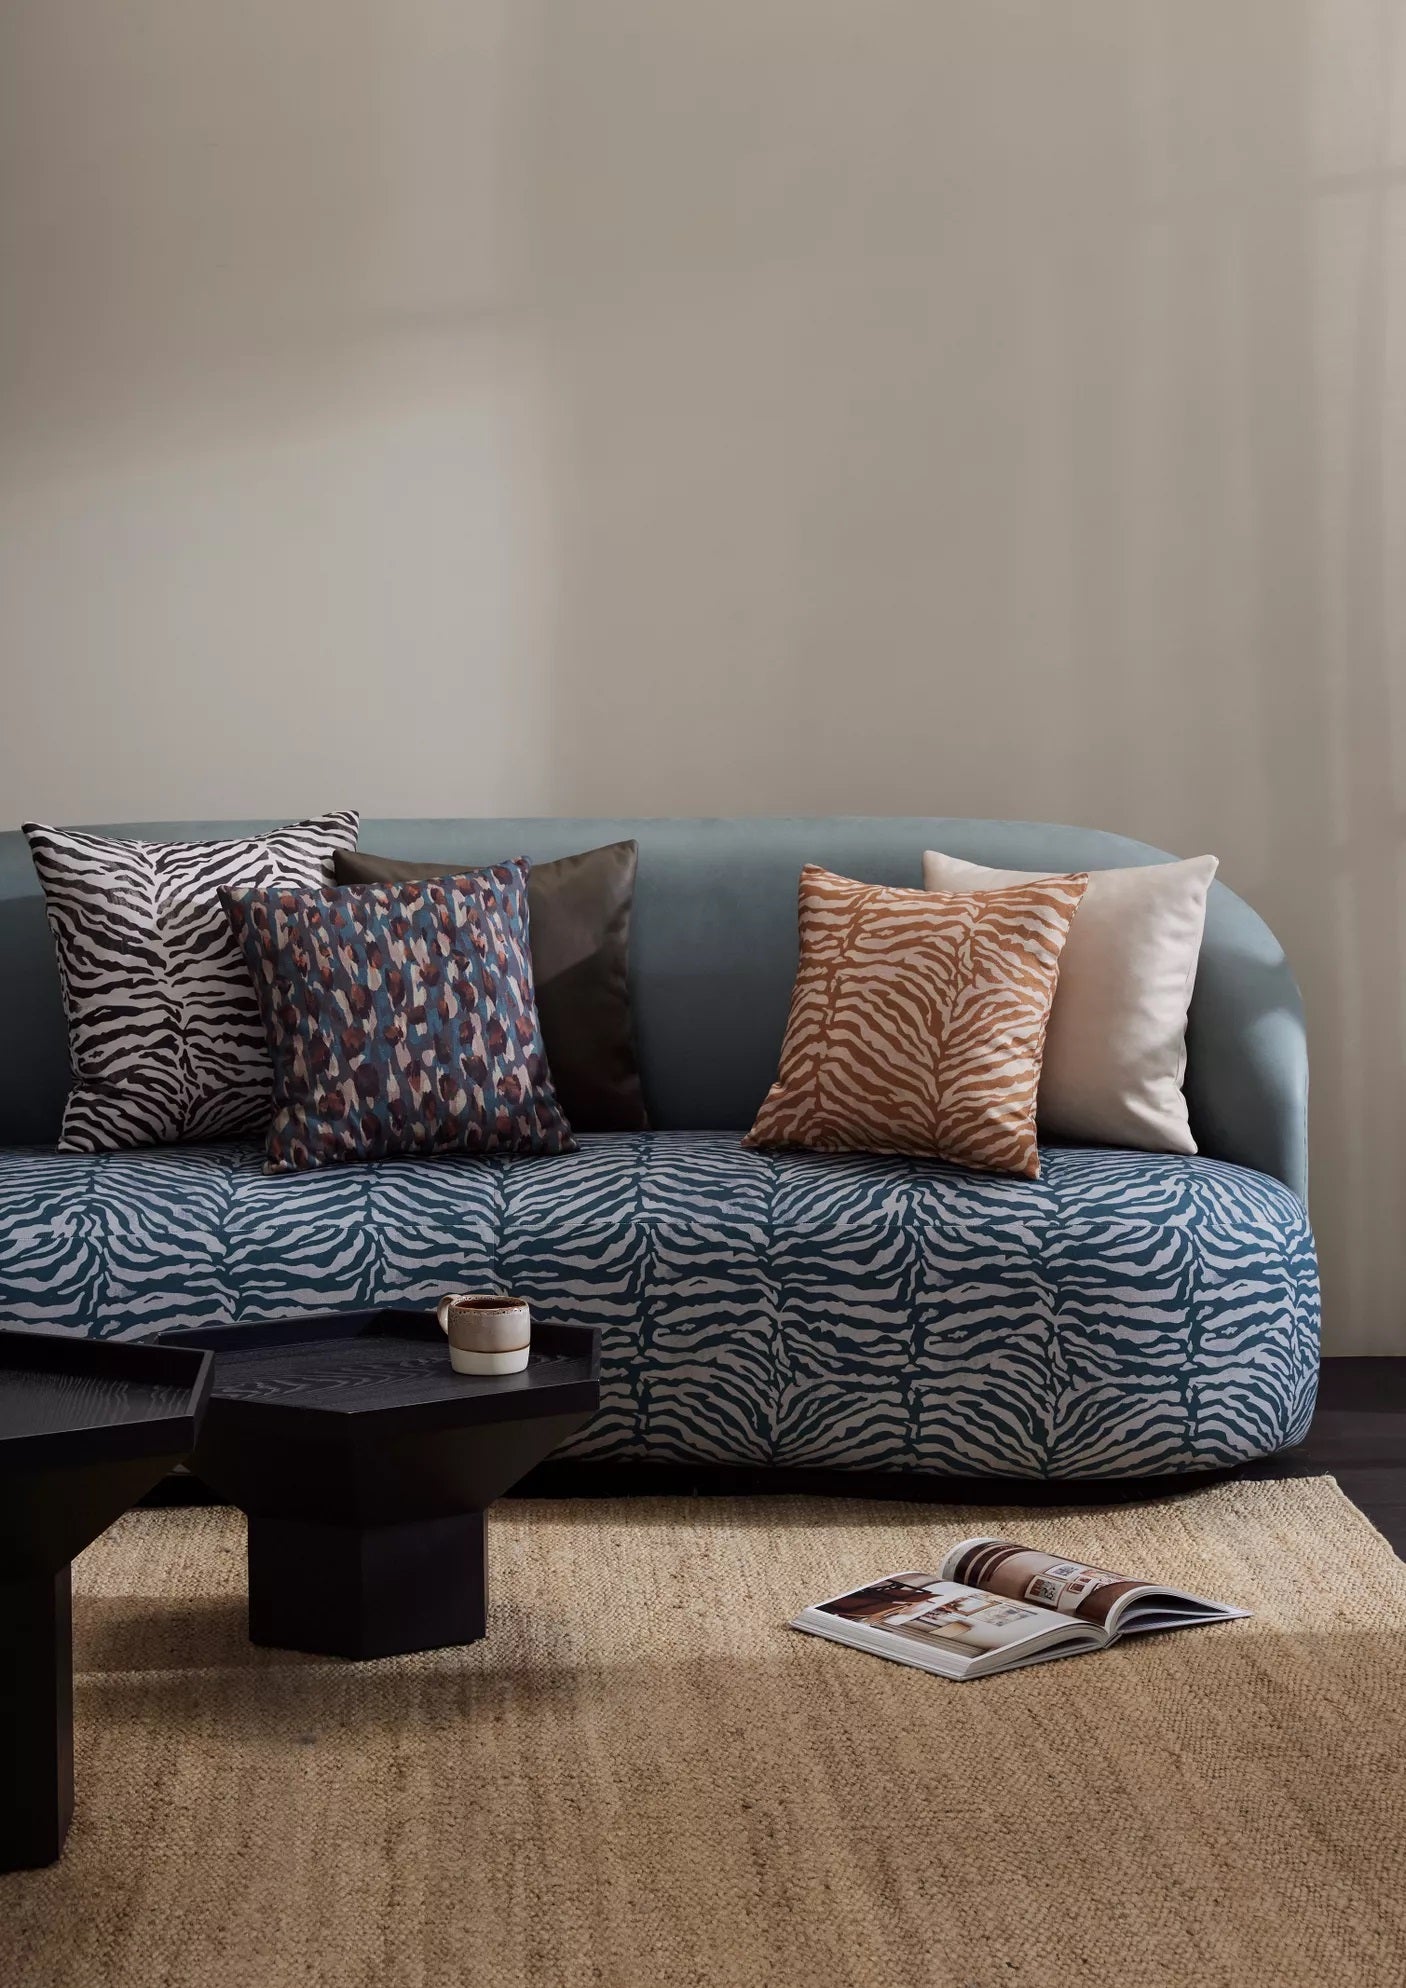 Nasir animal fabric on a blue sofa with cushions